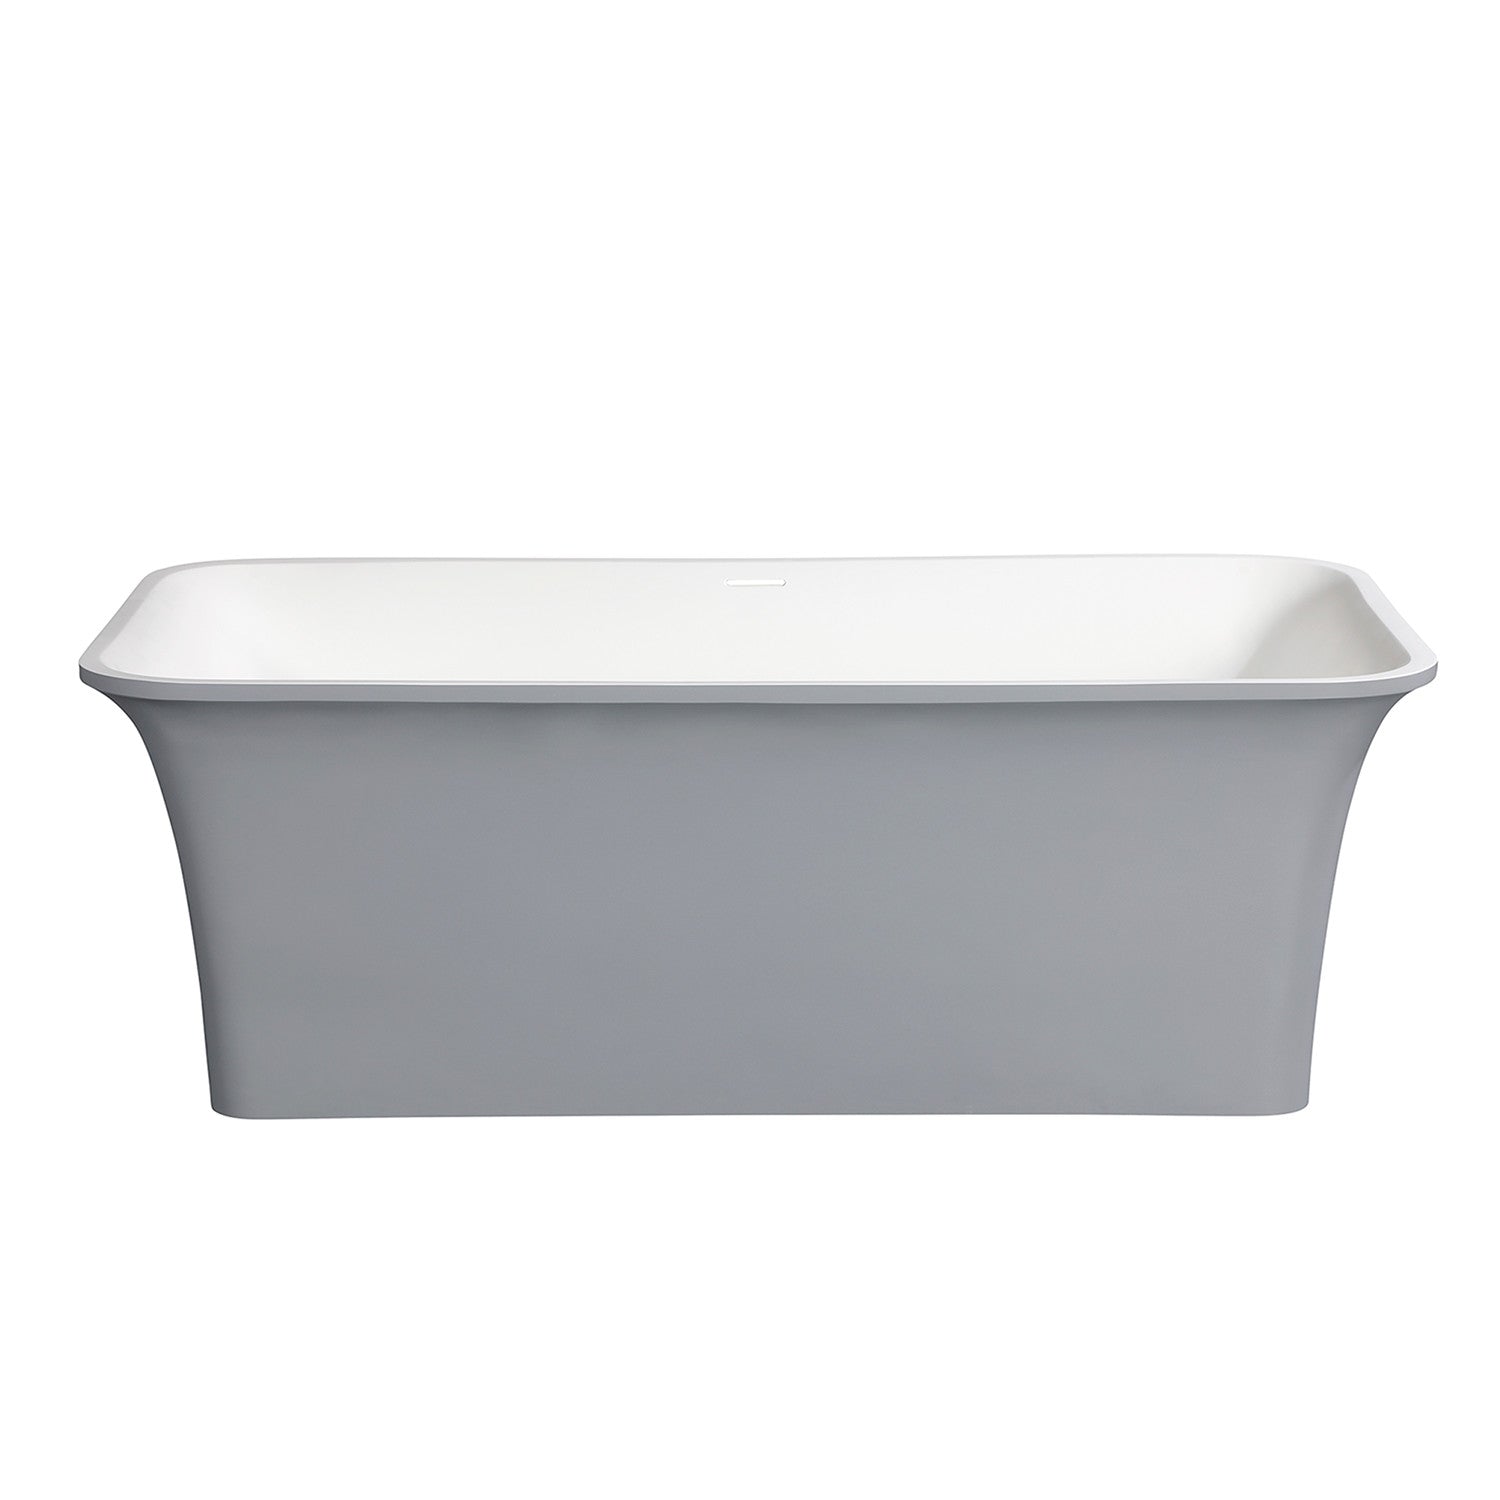 Kingston Brass Aqua Eden Arcticstone 67-Inch Solid Surface White Stone Freestanding Tub with Drain in Matte White/Gray